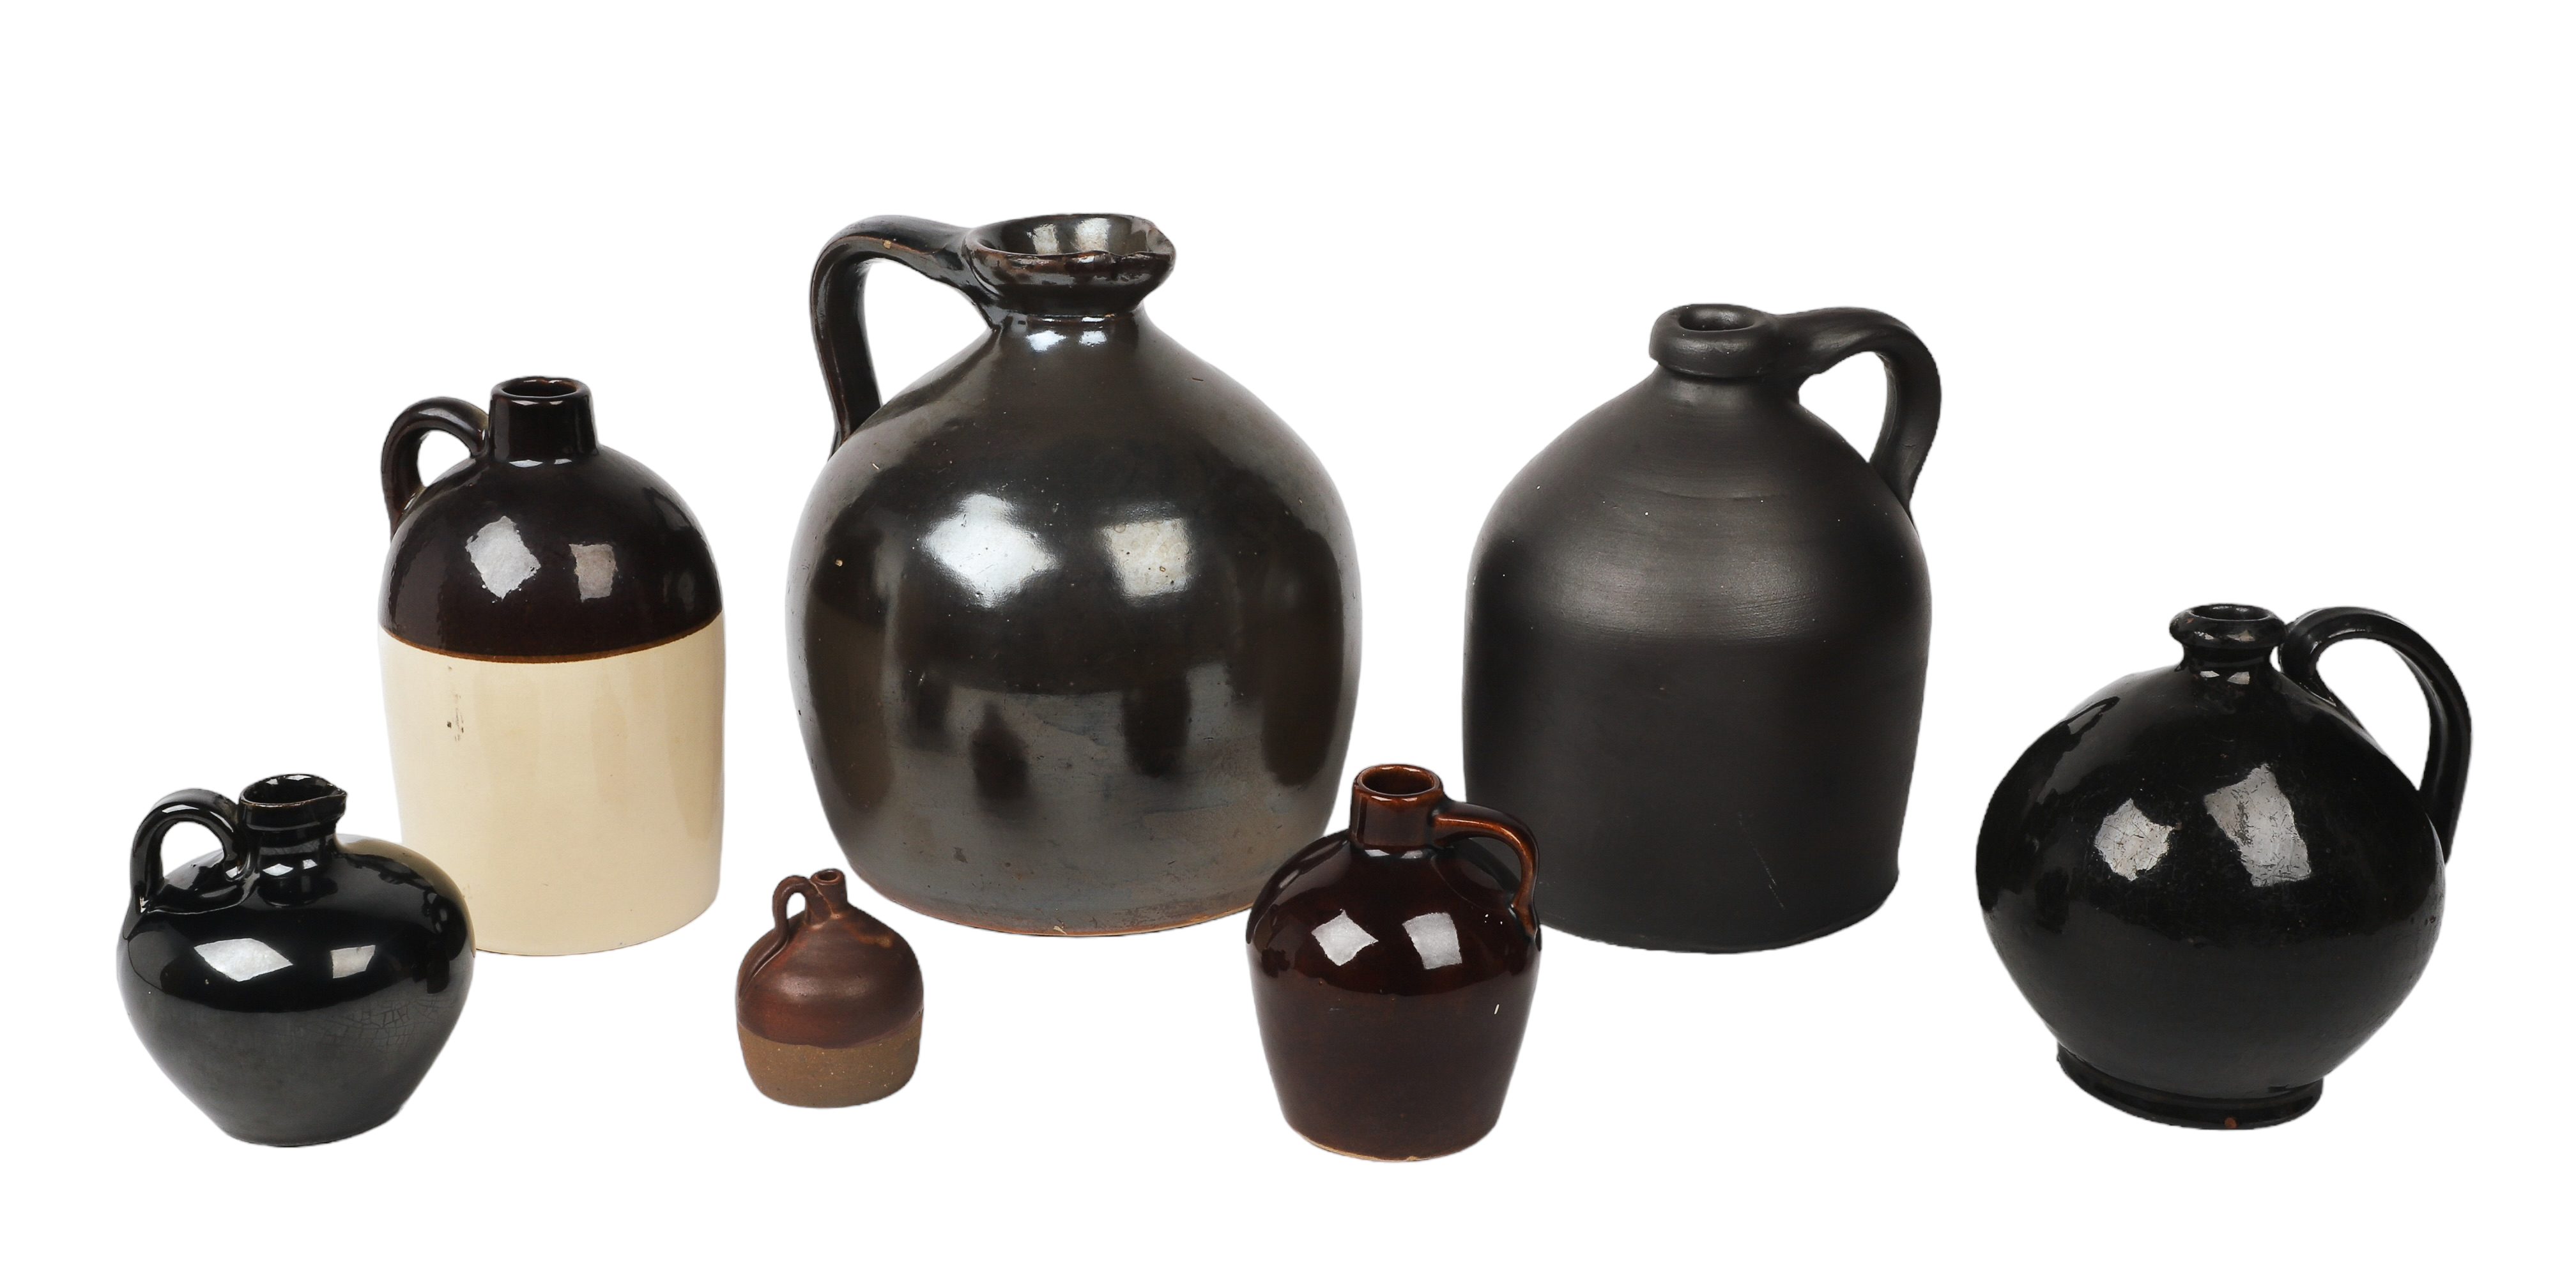  7 Stoneware jugs to include a 2e23a3